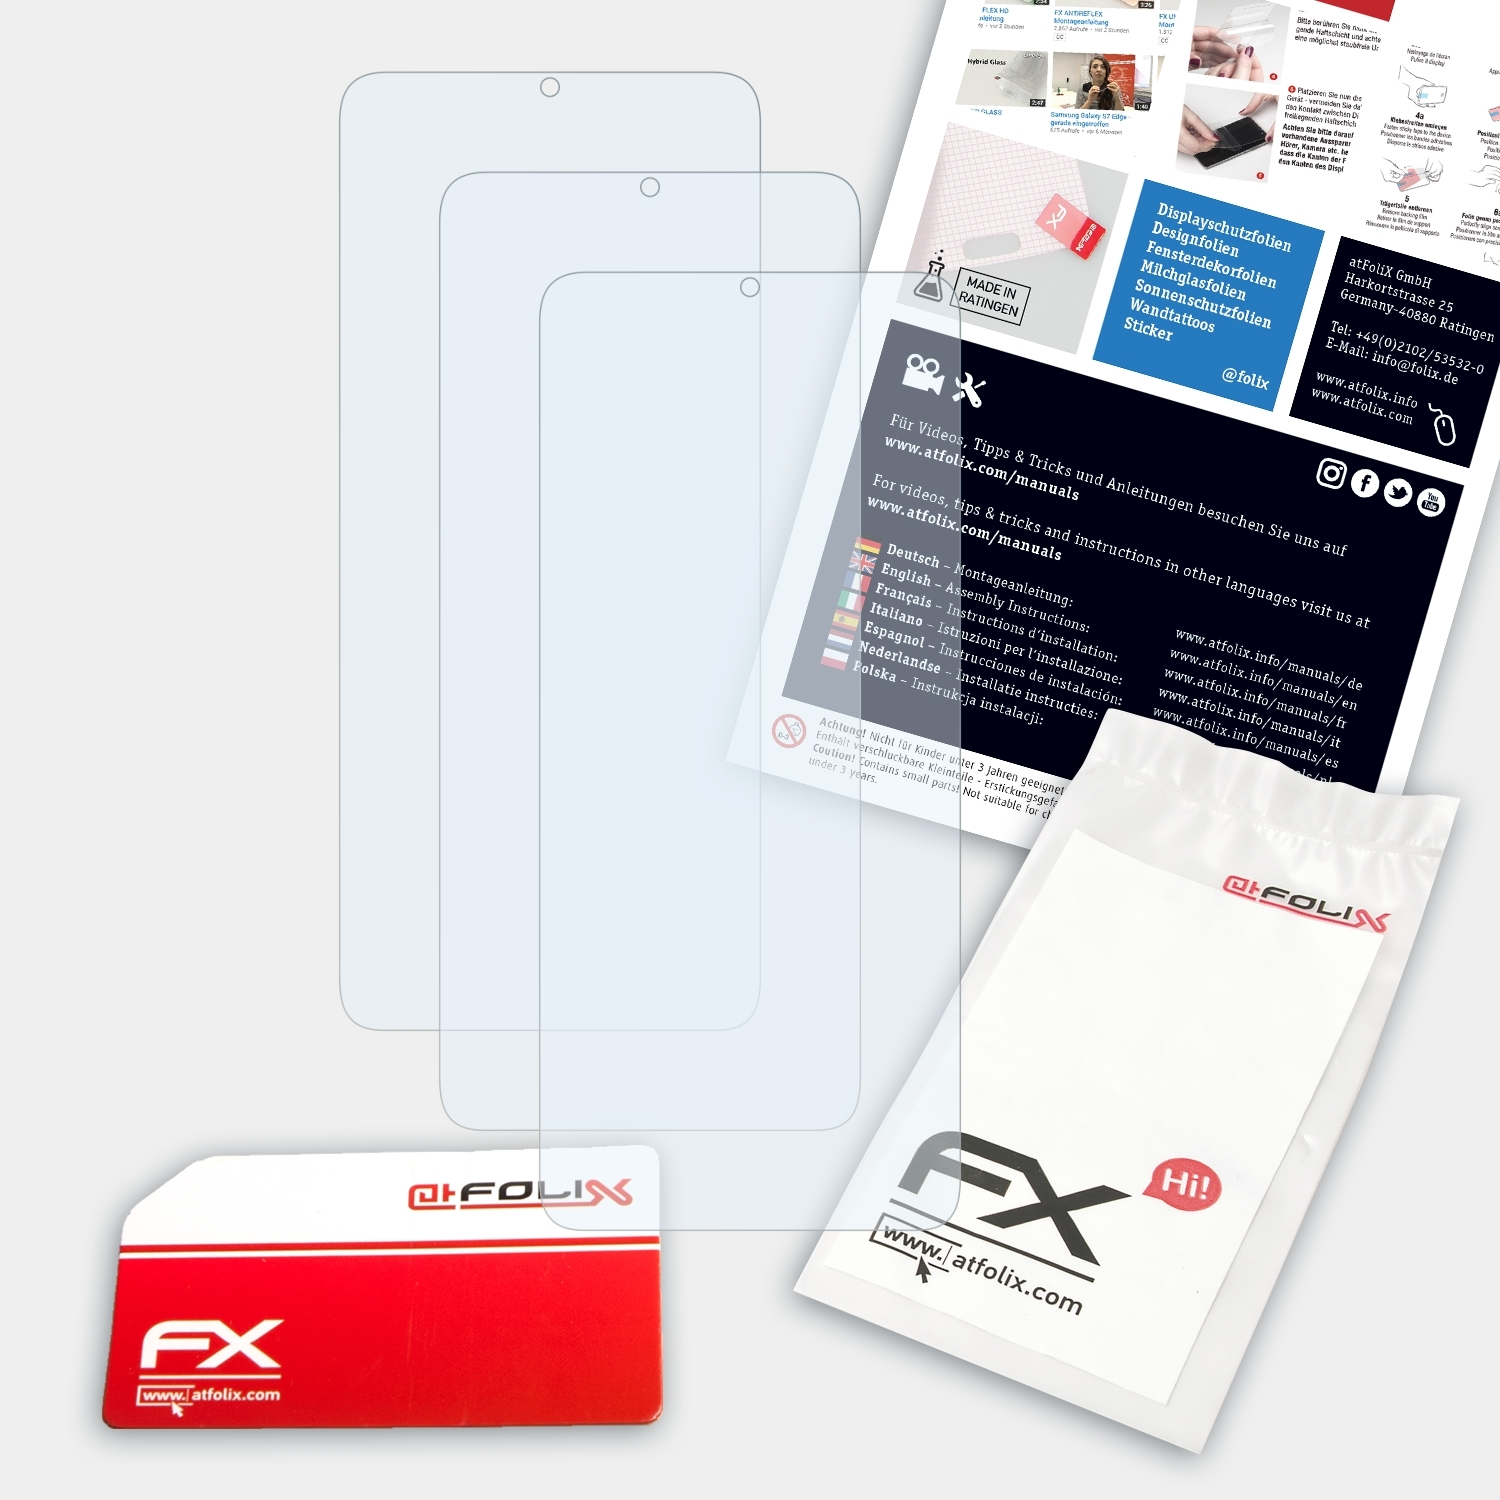 ATFOLIX 3x FX-Clear Displayschutz(für TCL 306)